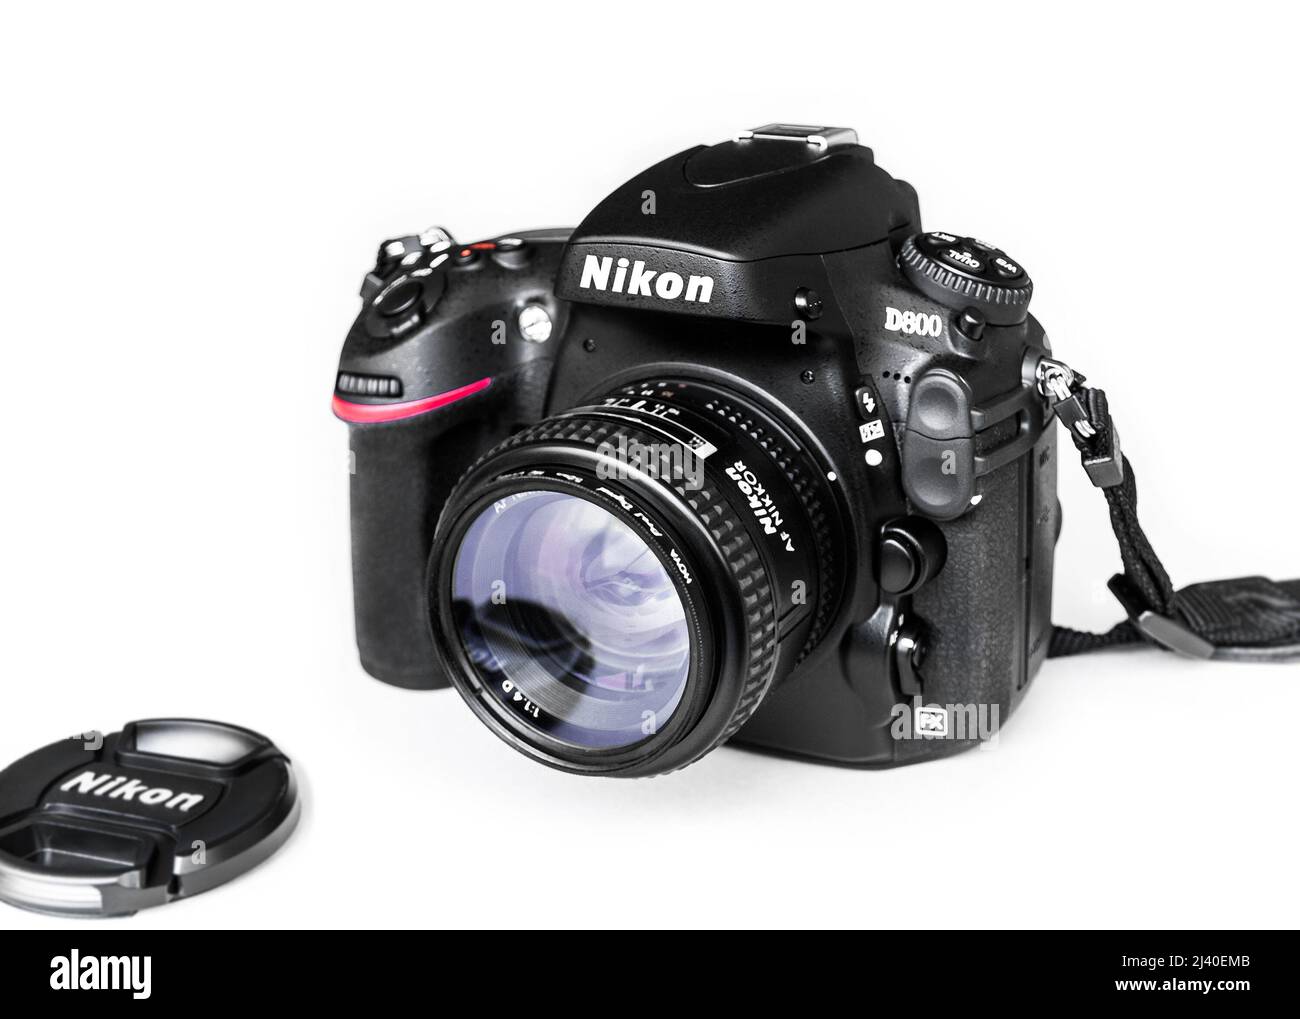 photo camera Nikon D800 + Nikkor 50mm kit on the white Stock Photo